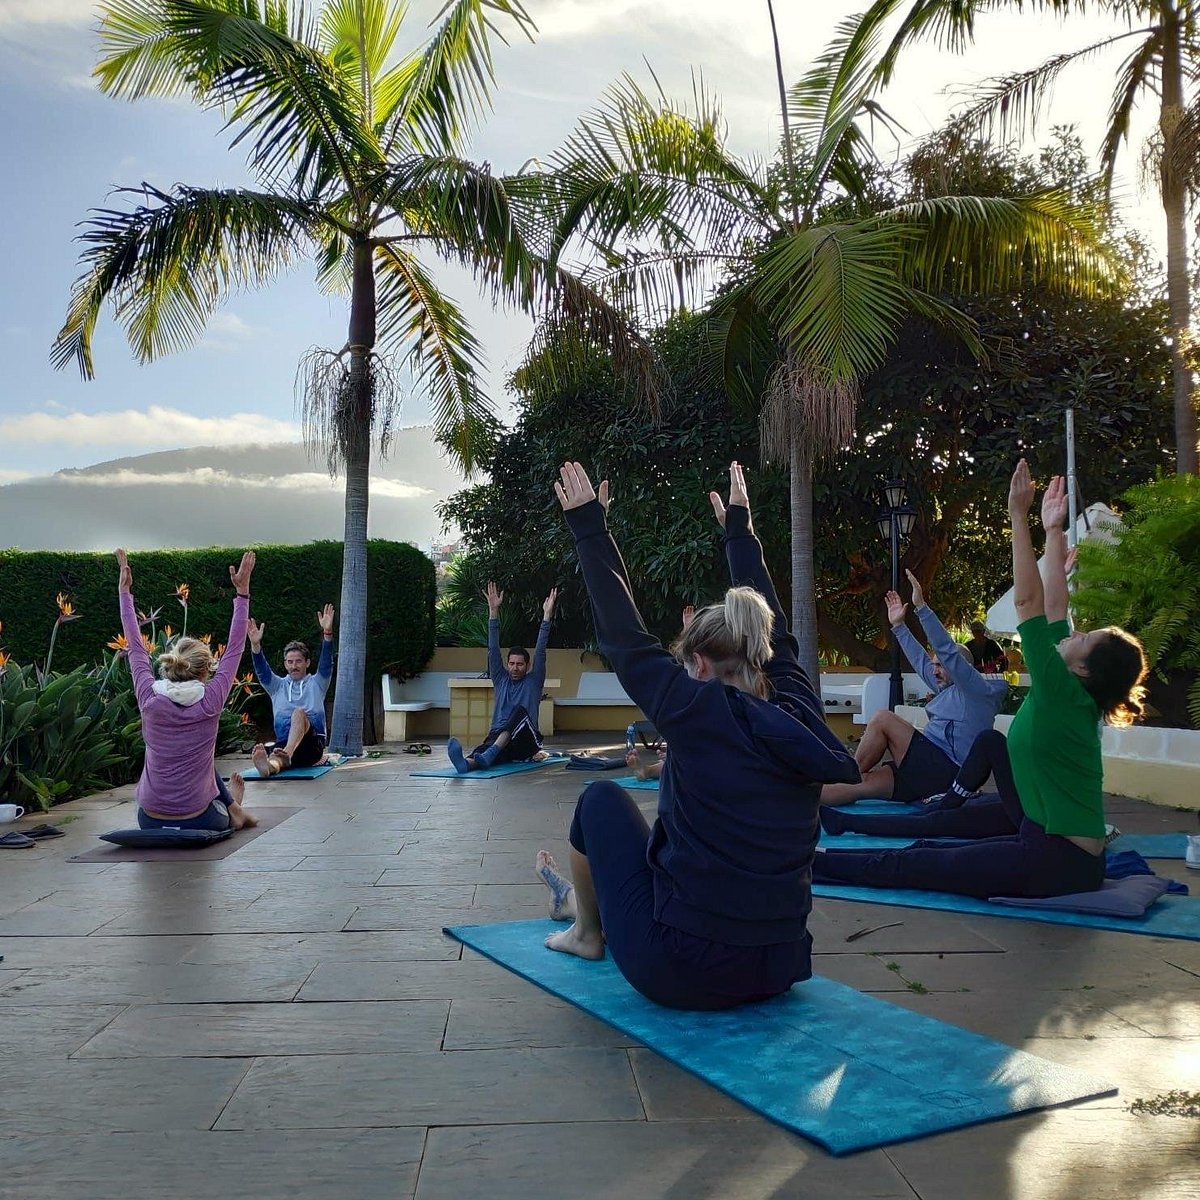 Yoga & Pilates Stretching Mat - TFS